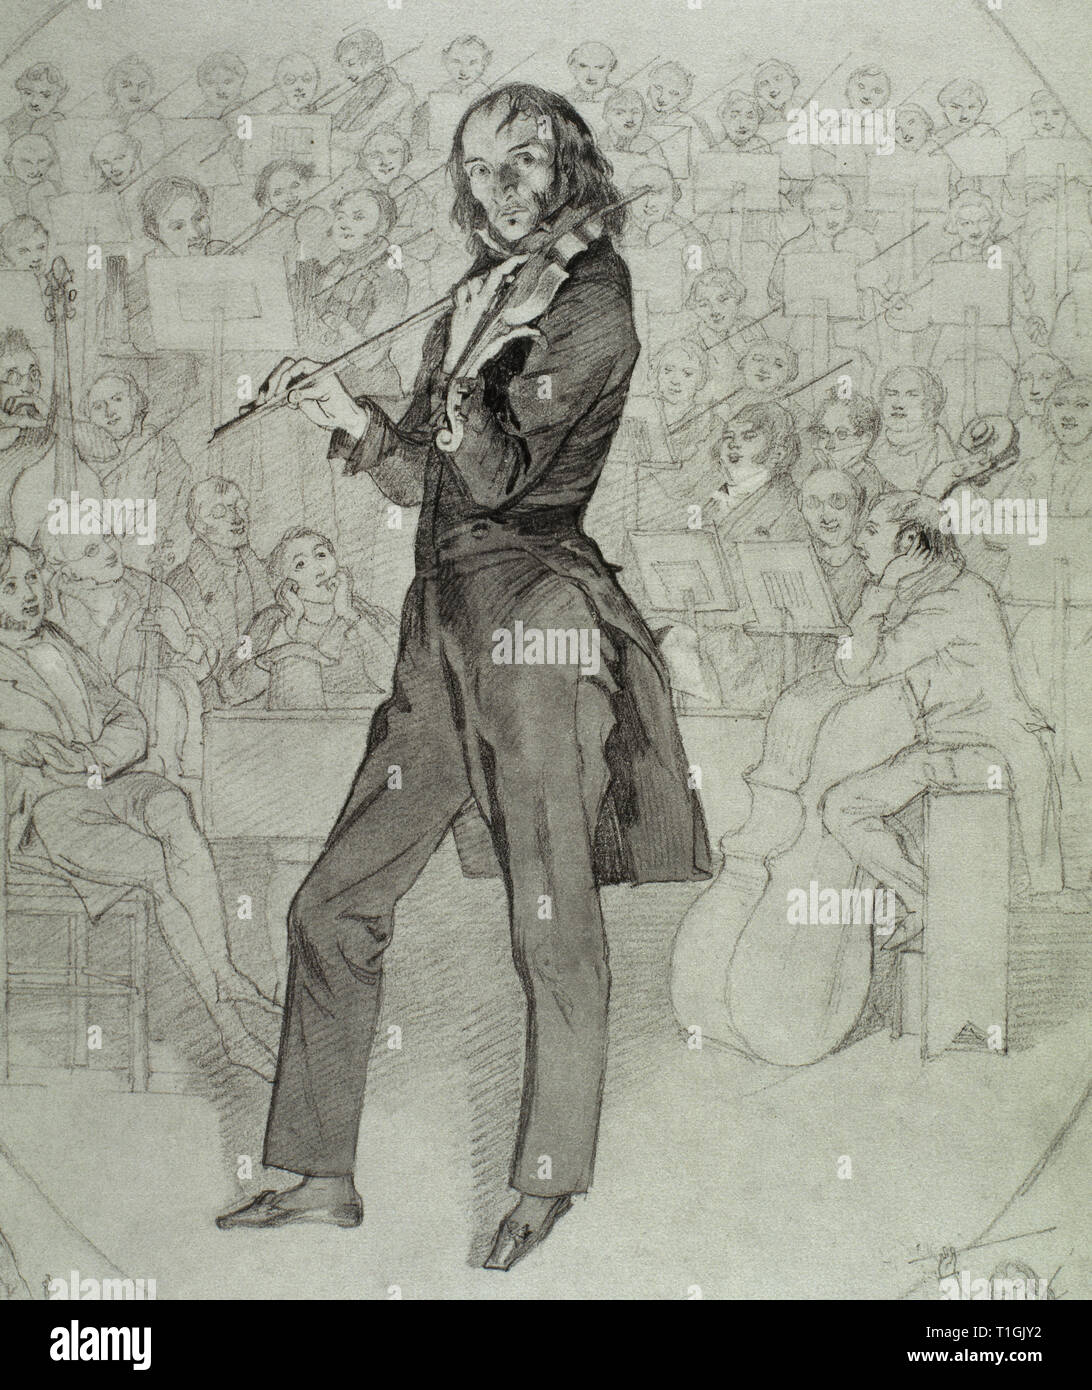 Niccolo Paganini (1782-1840). Le violoniste italien. Dessin de Daniel Maclise (1806-1870), 1831. Victoria and Albert Museum. Londres, Angleterre, Royaume-Uni. Banque D'Images